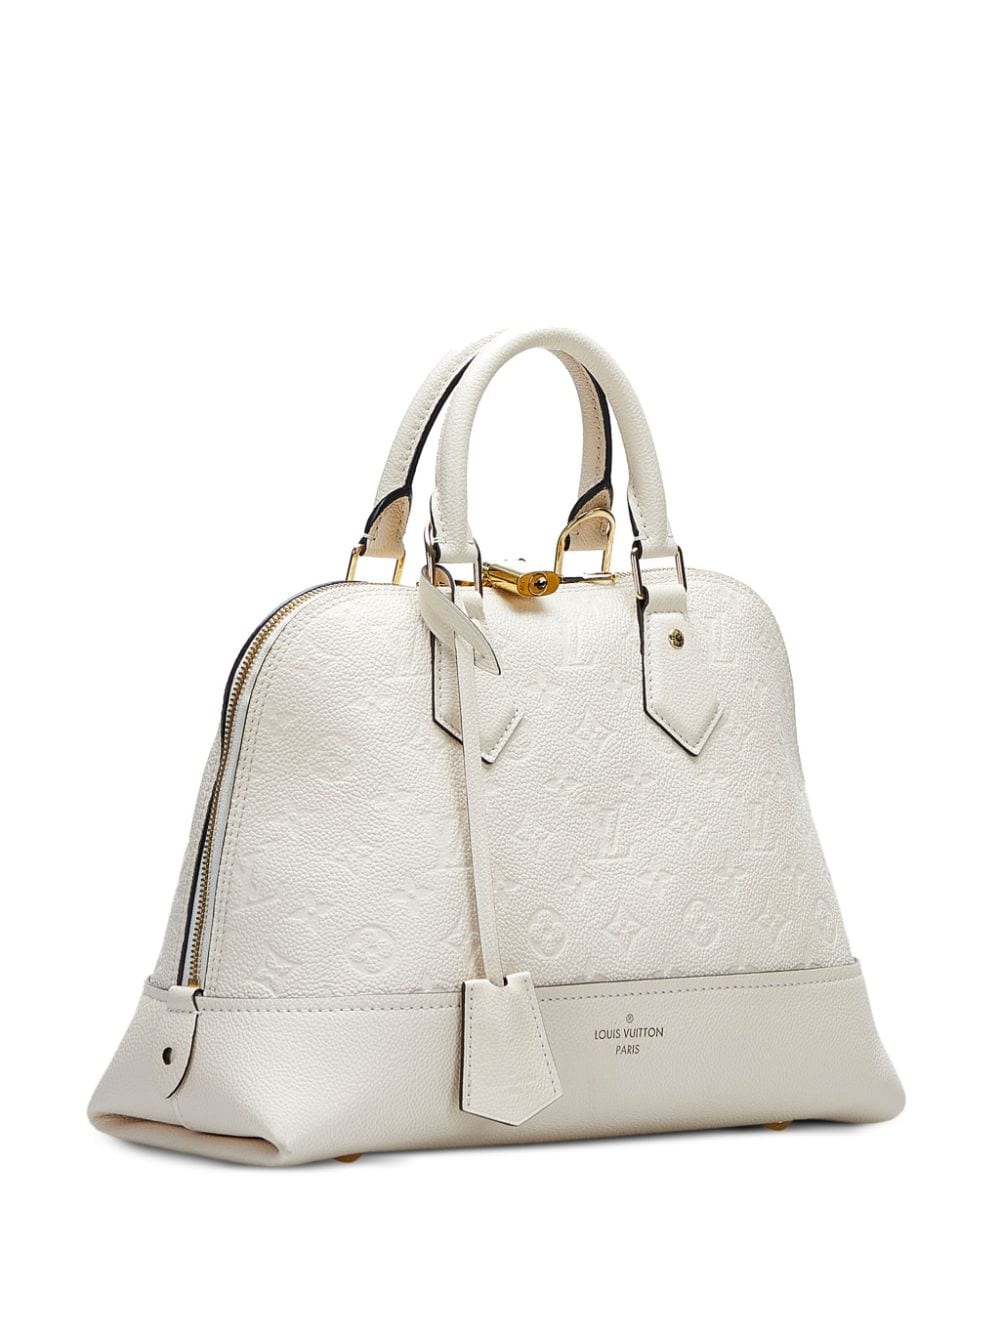 Louis Vuitton, Bags, Euc Authentic Louis Vuitton Empreinte Neo Alma Pm